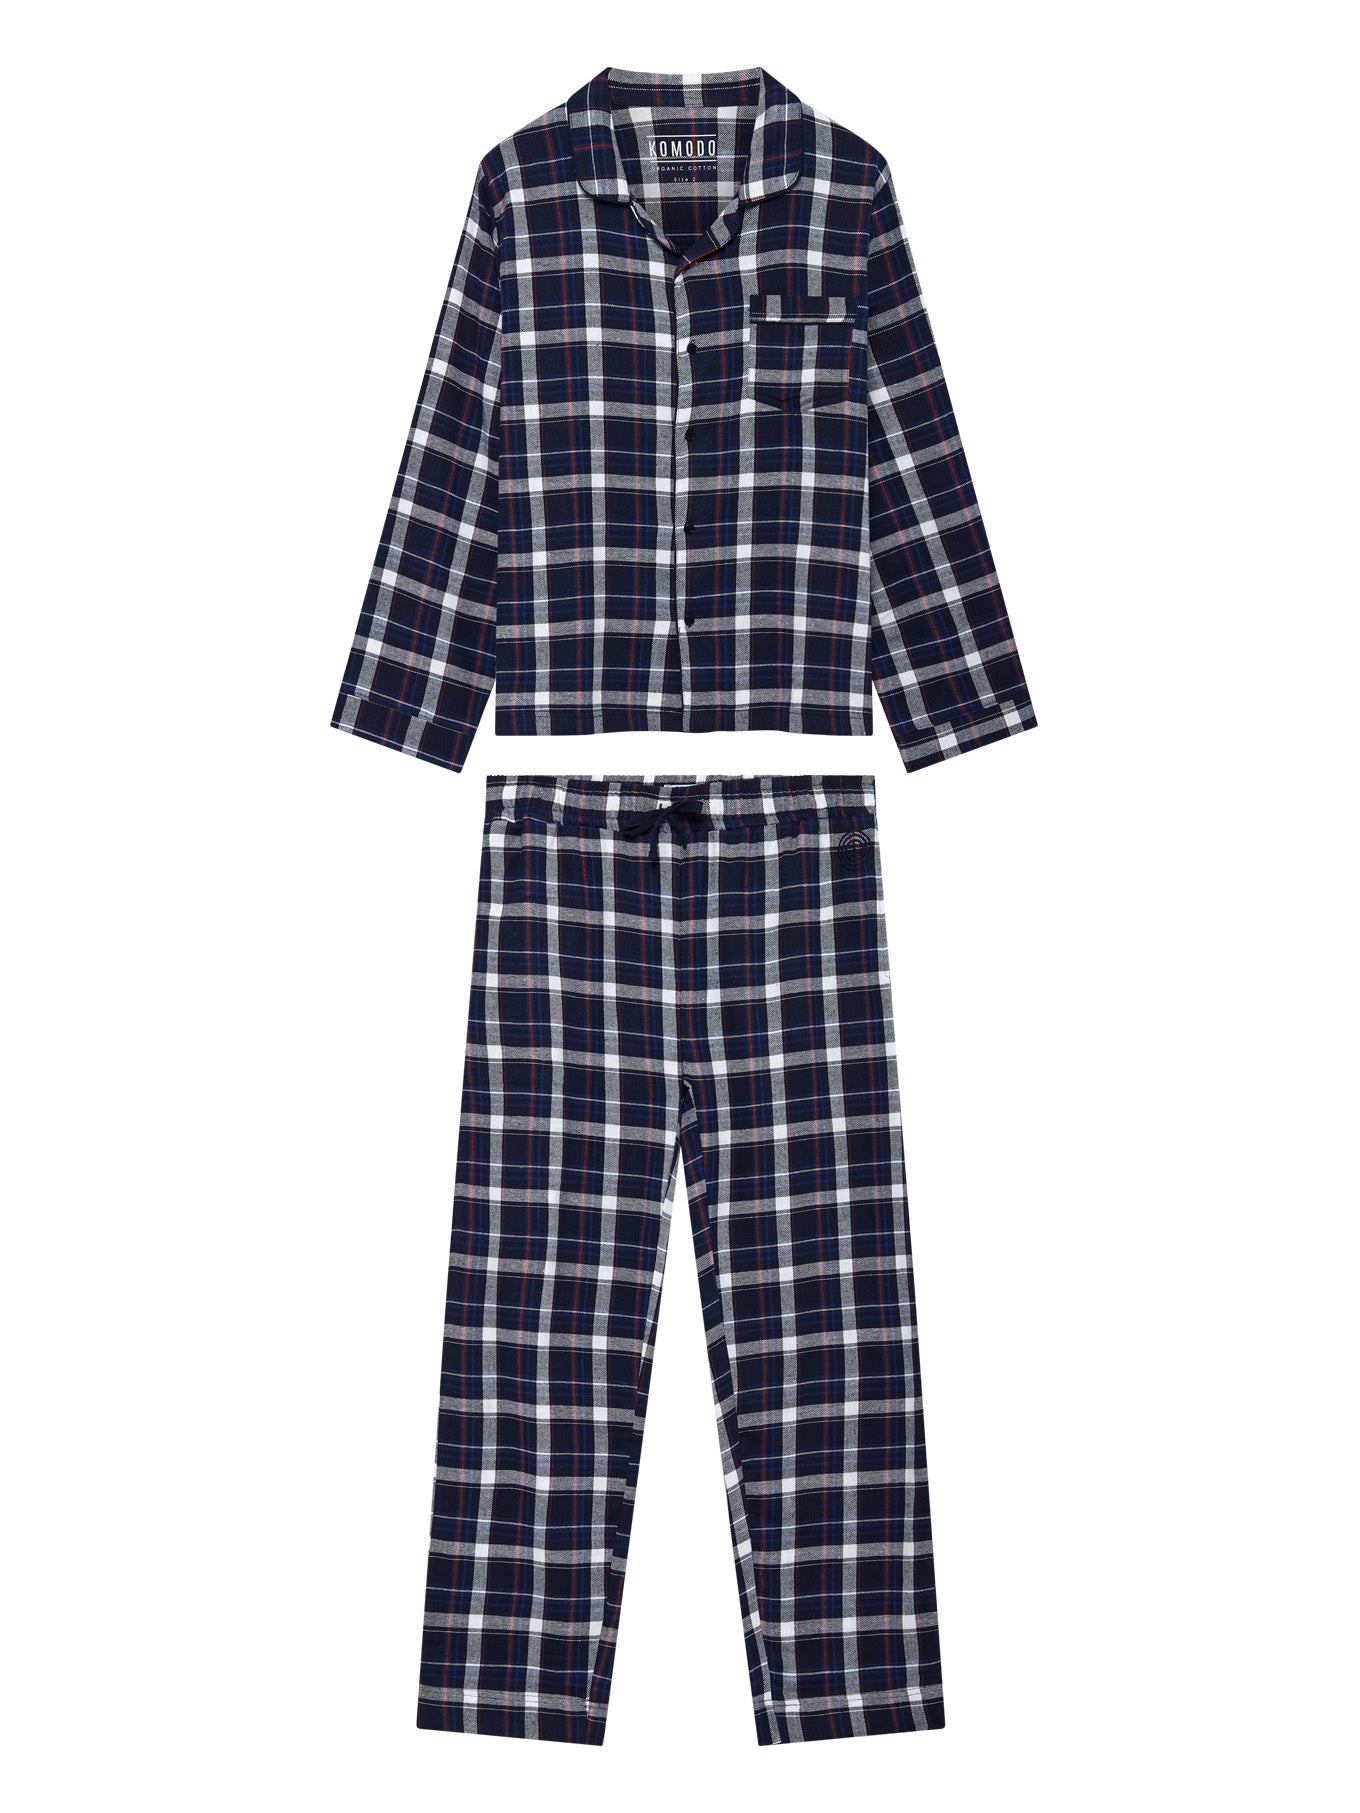 Ensemble pyjama bleu foncé JIM JAM en coton 100% biologique de Komodo 